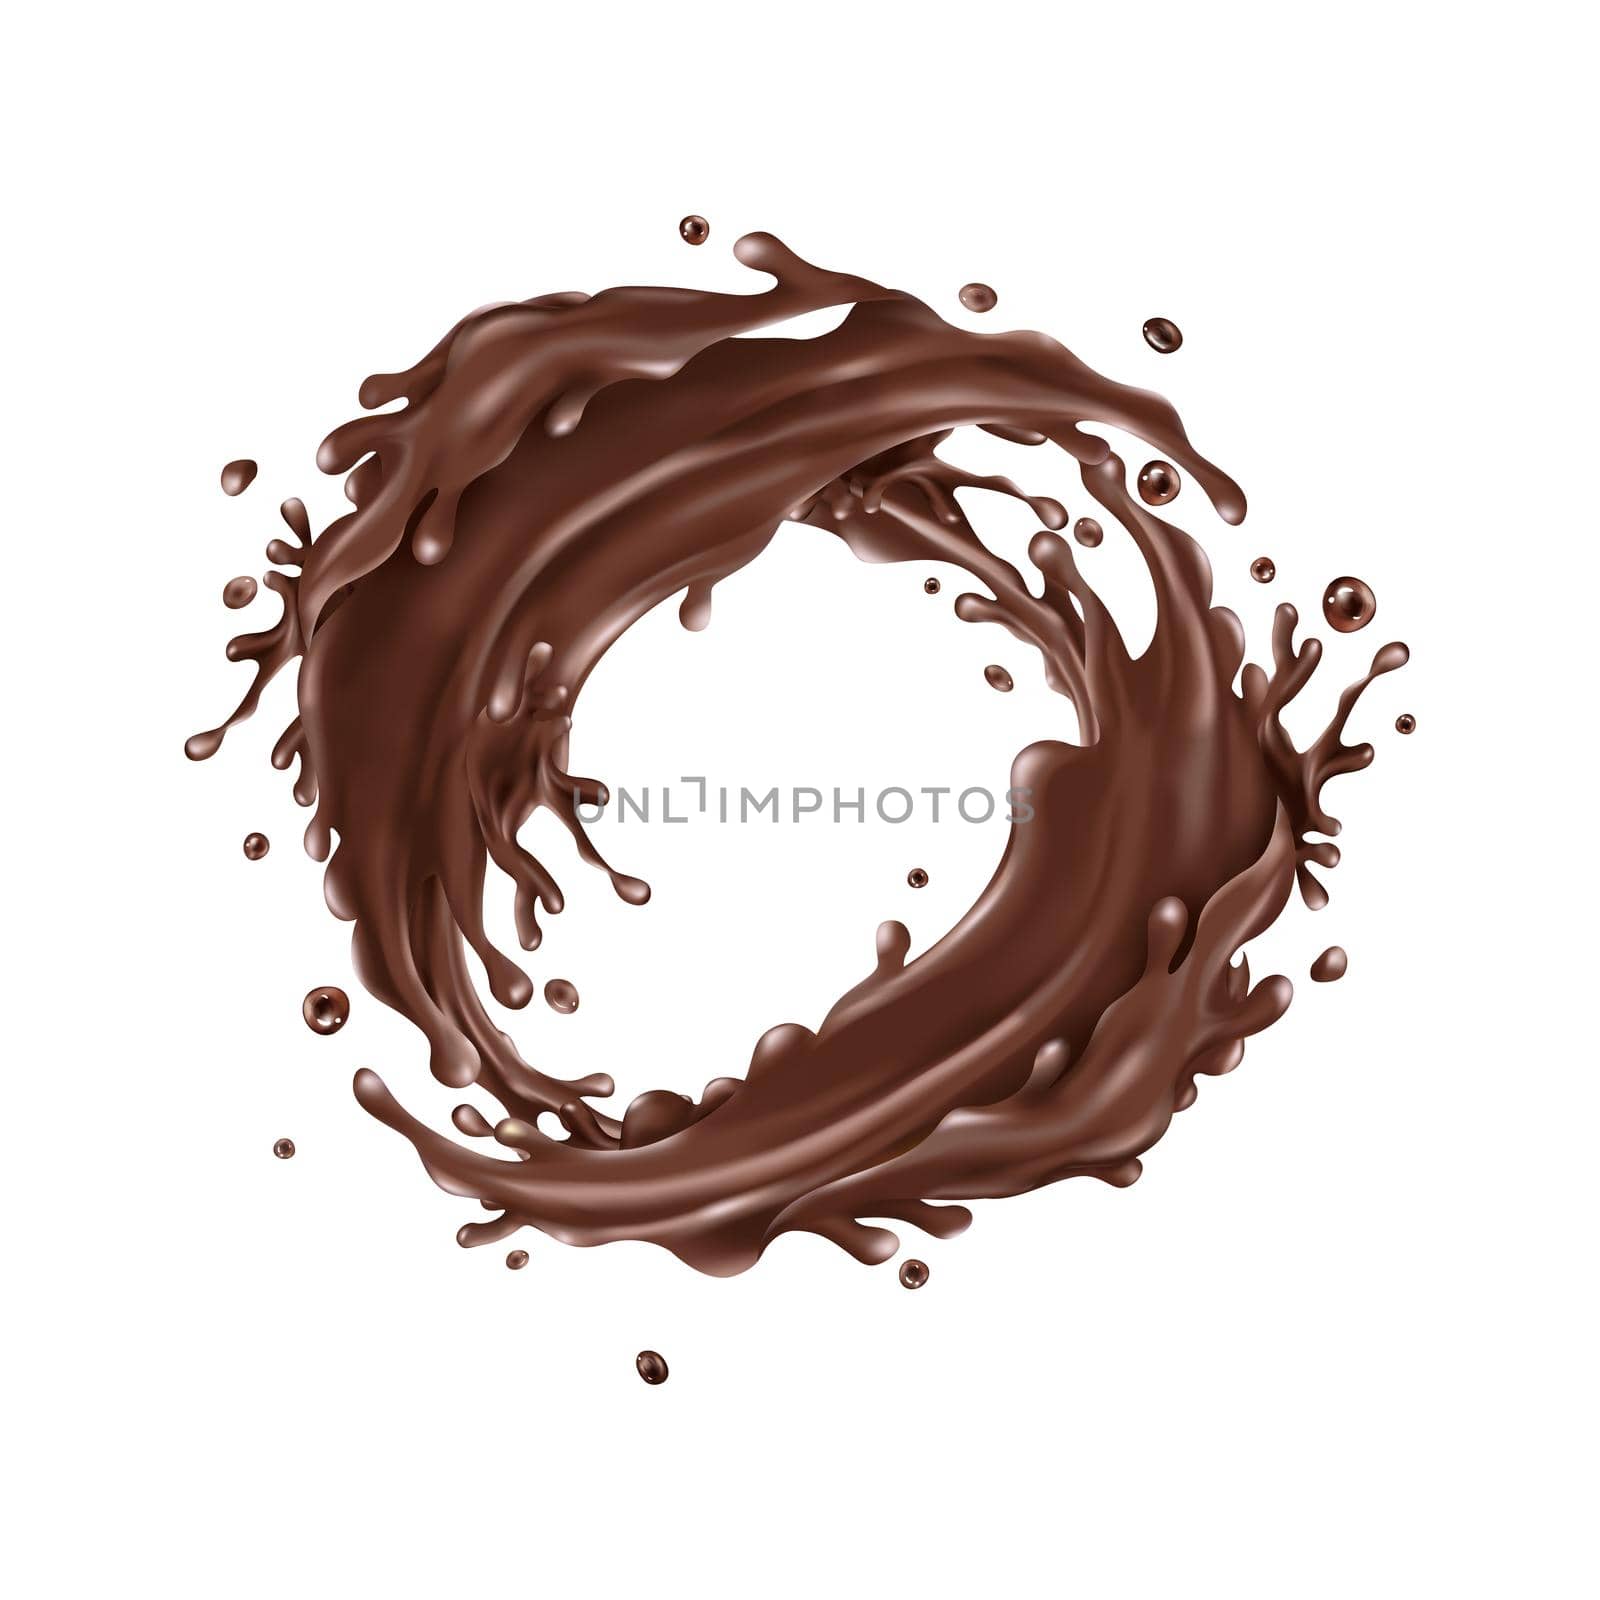 Liquid chocolate dynamic splash. Illustration in realistic style.